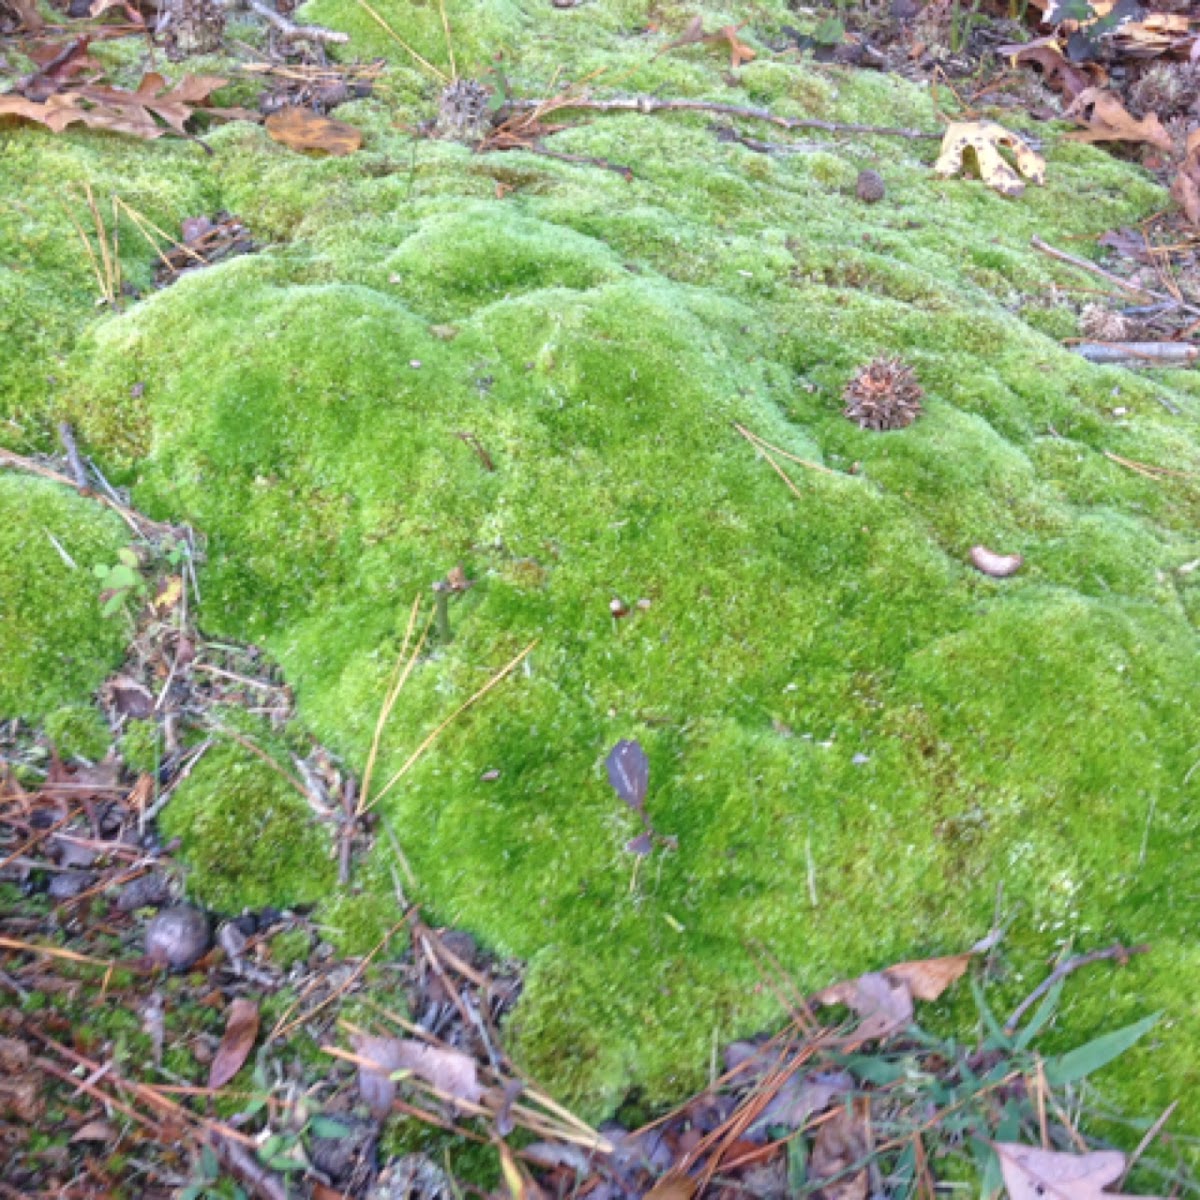 Cushion moss